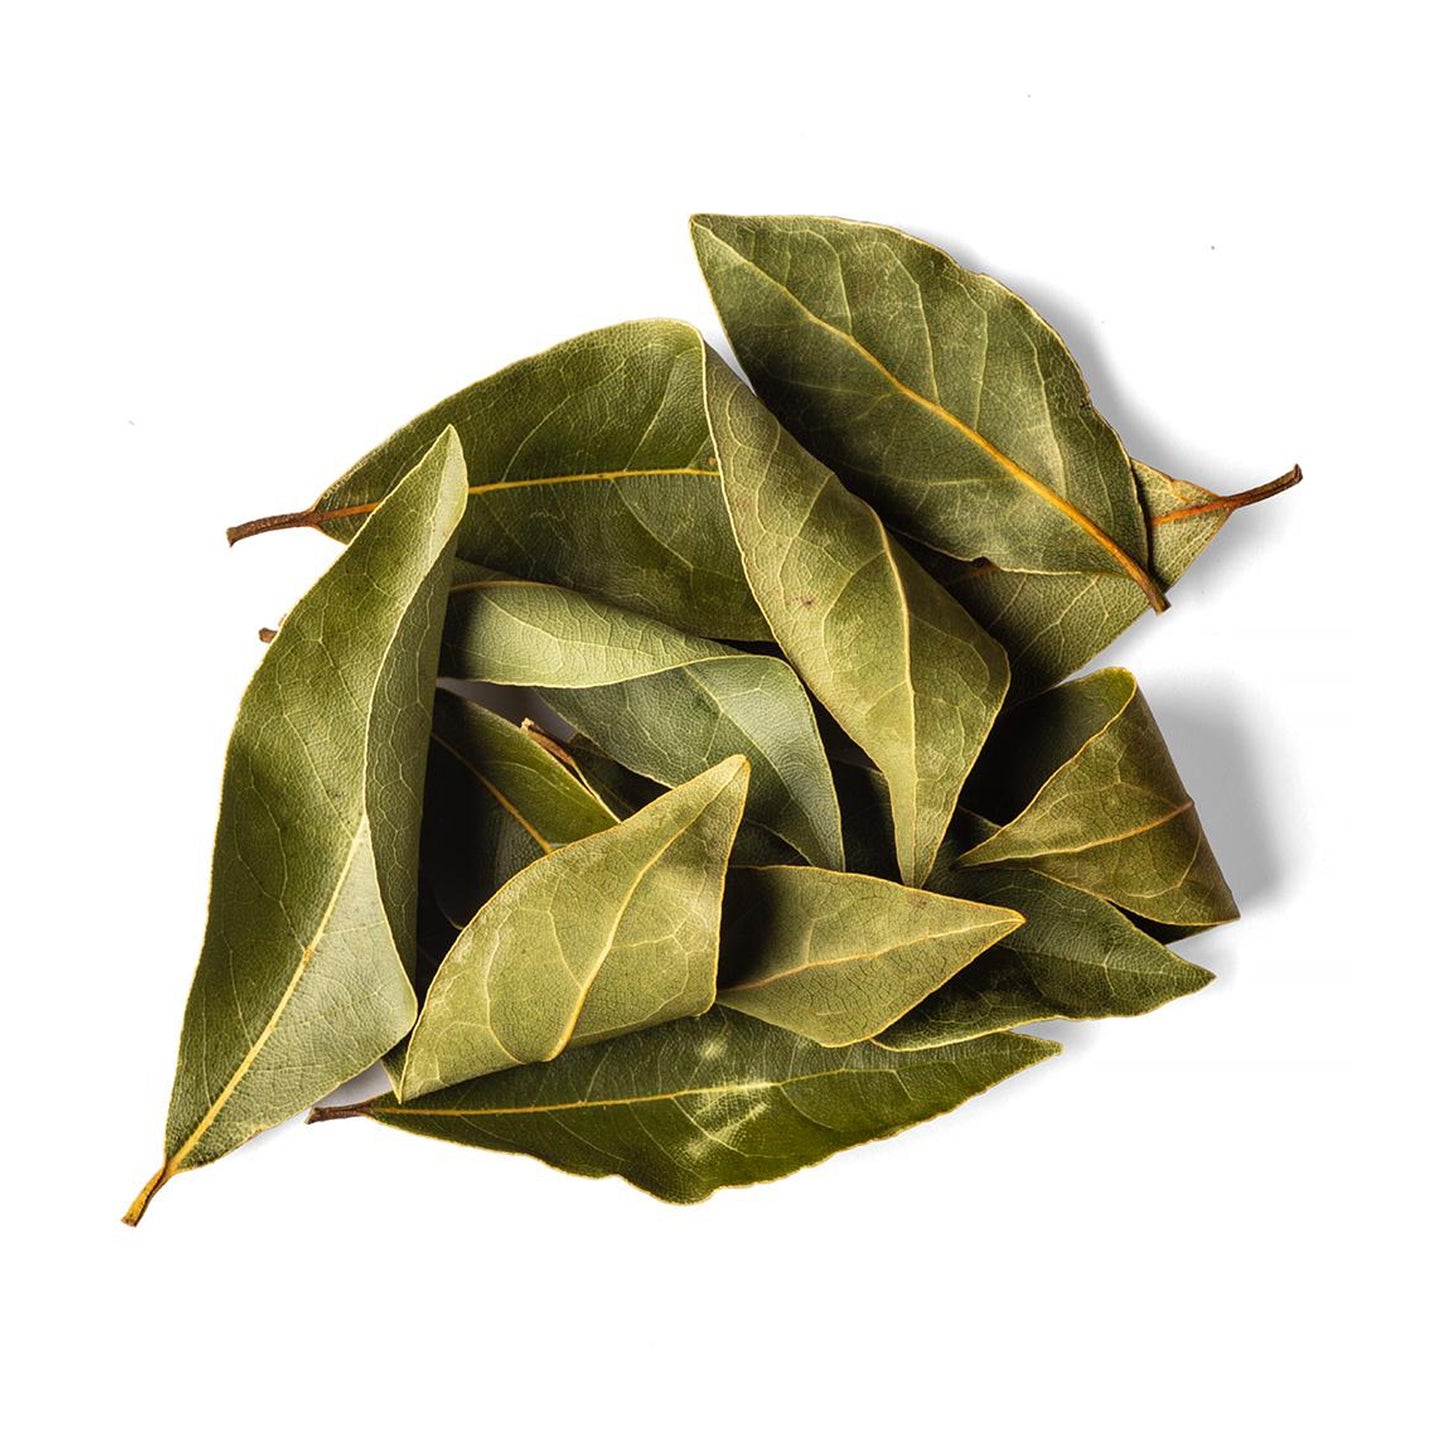 Organic Bay leaf, 0.04 lb - Buy Natural Dried Bay Leaves